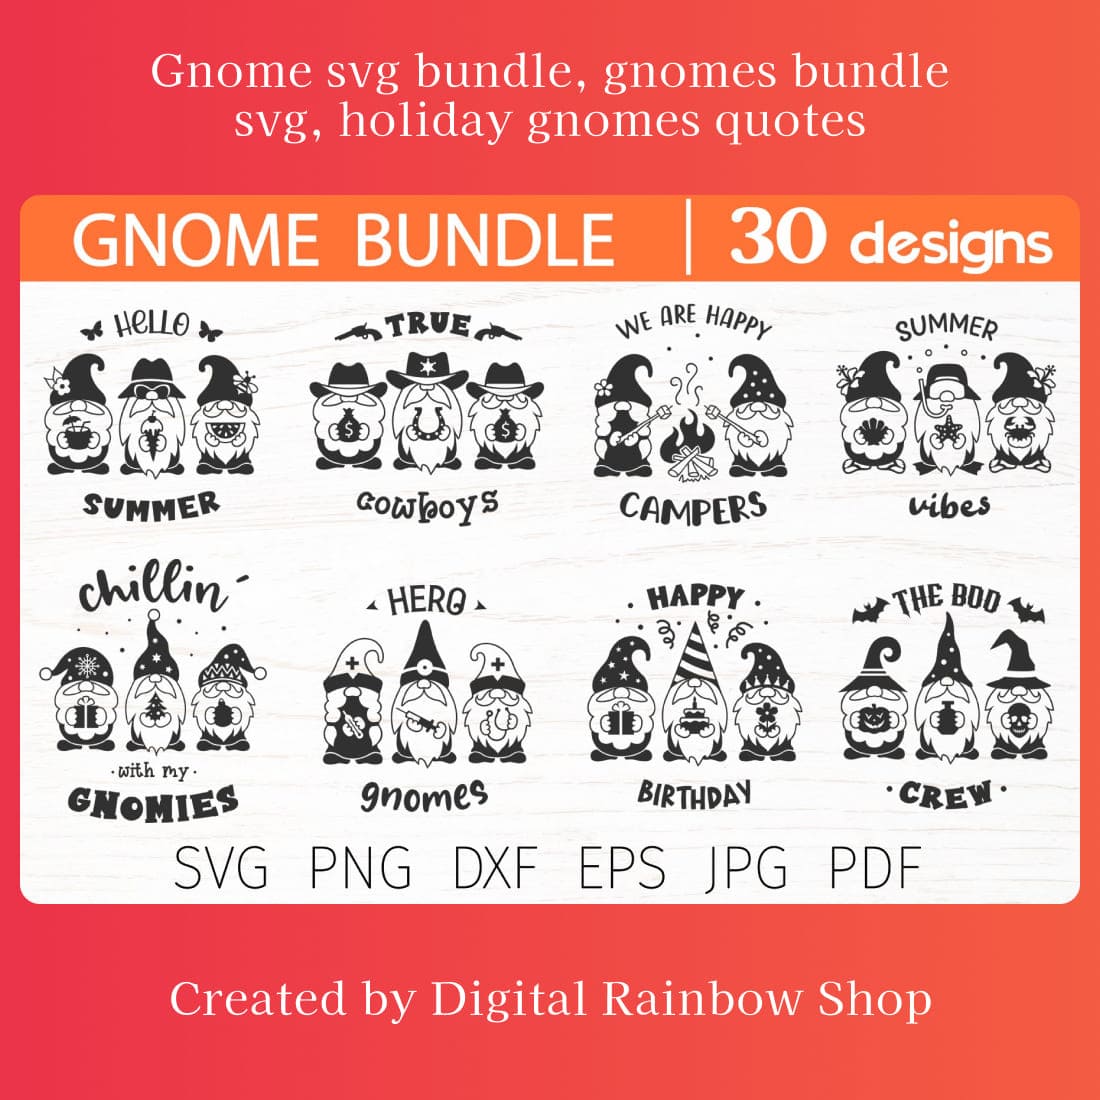 Gnome svg bundle, gnomes bundle svg, holiday gnomes quotes main cover.